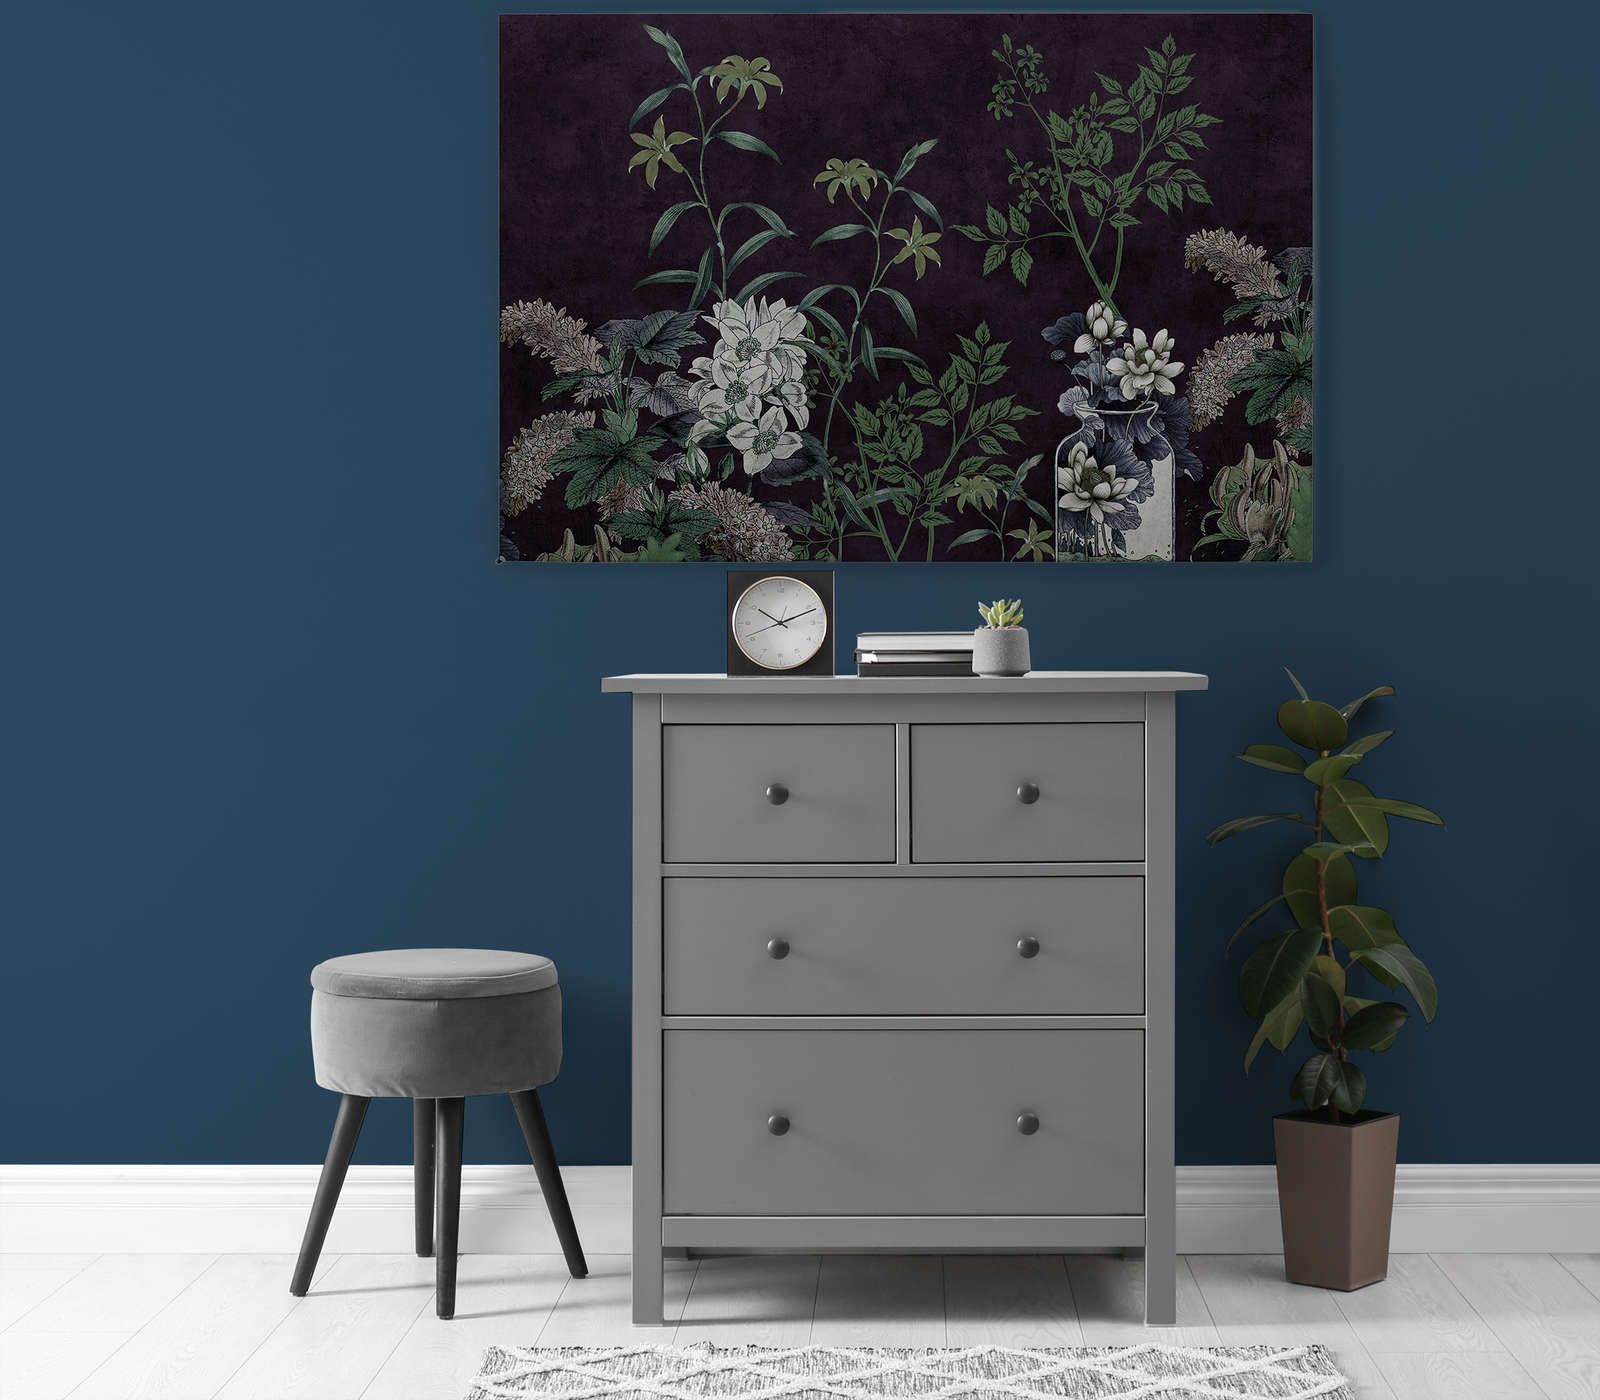             Dark Room 1 - Toile noire motif botanique vert - 1,20 m x 0,80 m
        